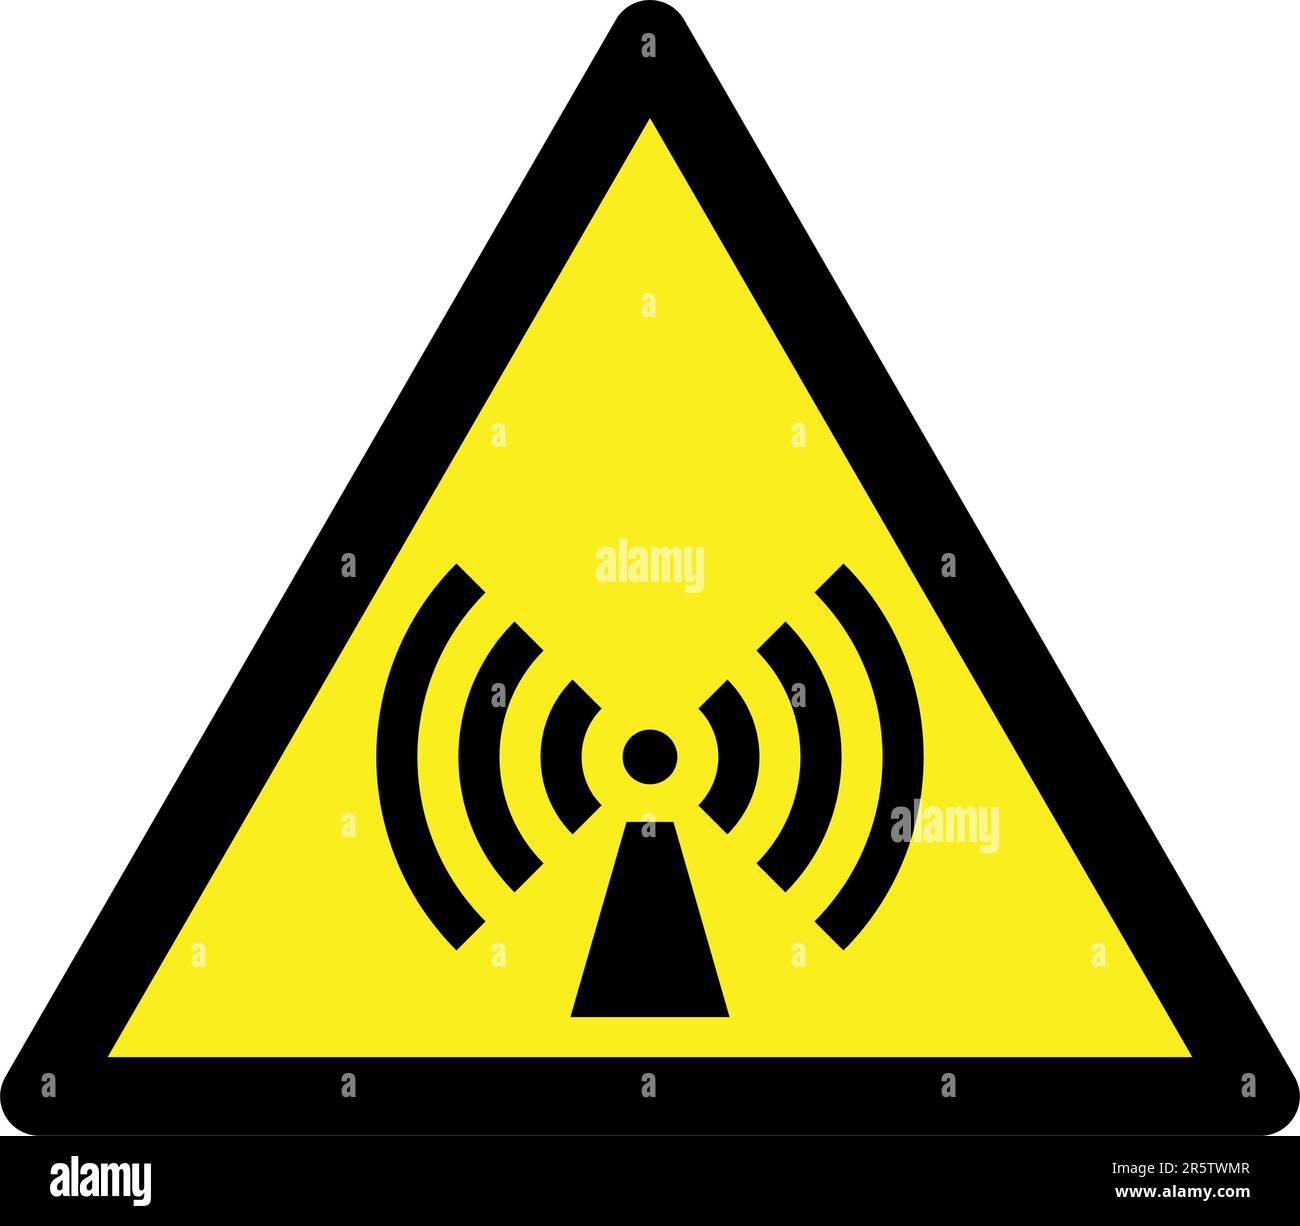 radiation symbol on triangular yellow sign Stock Vector